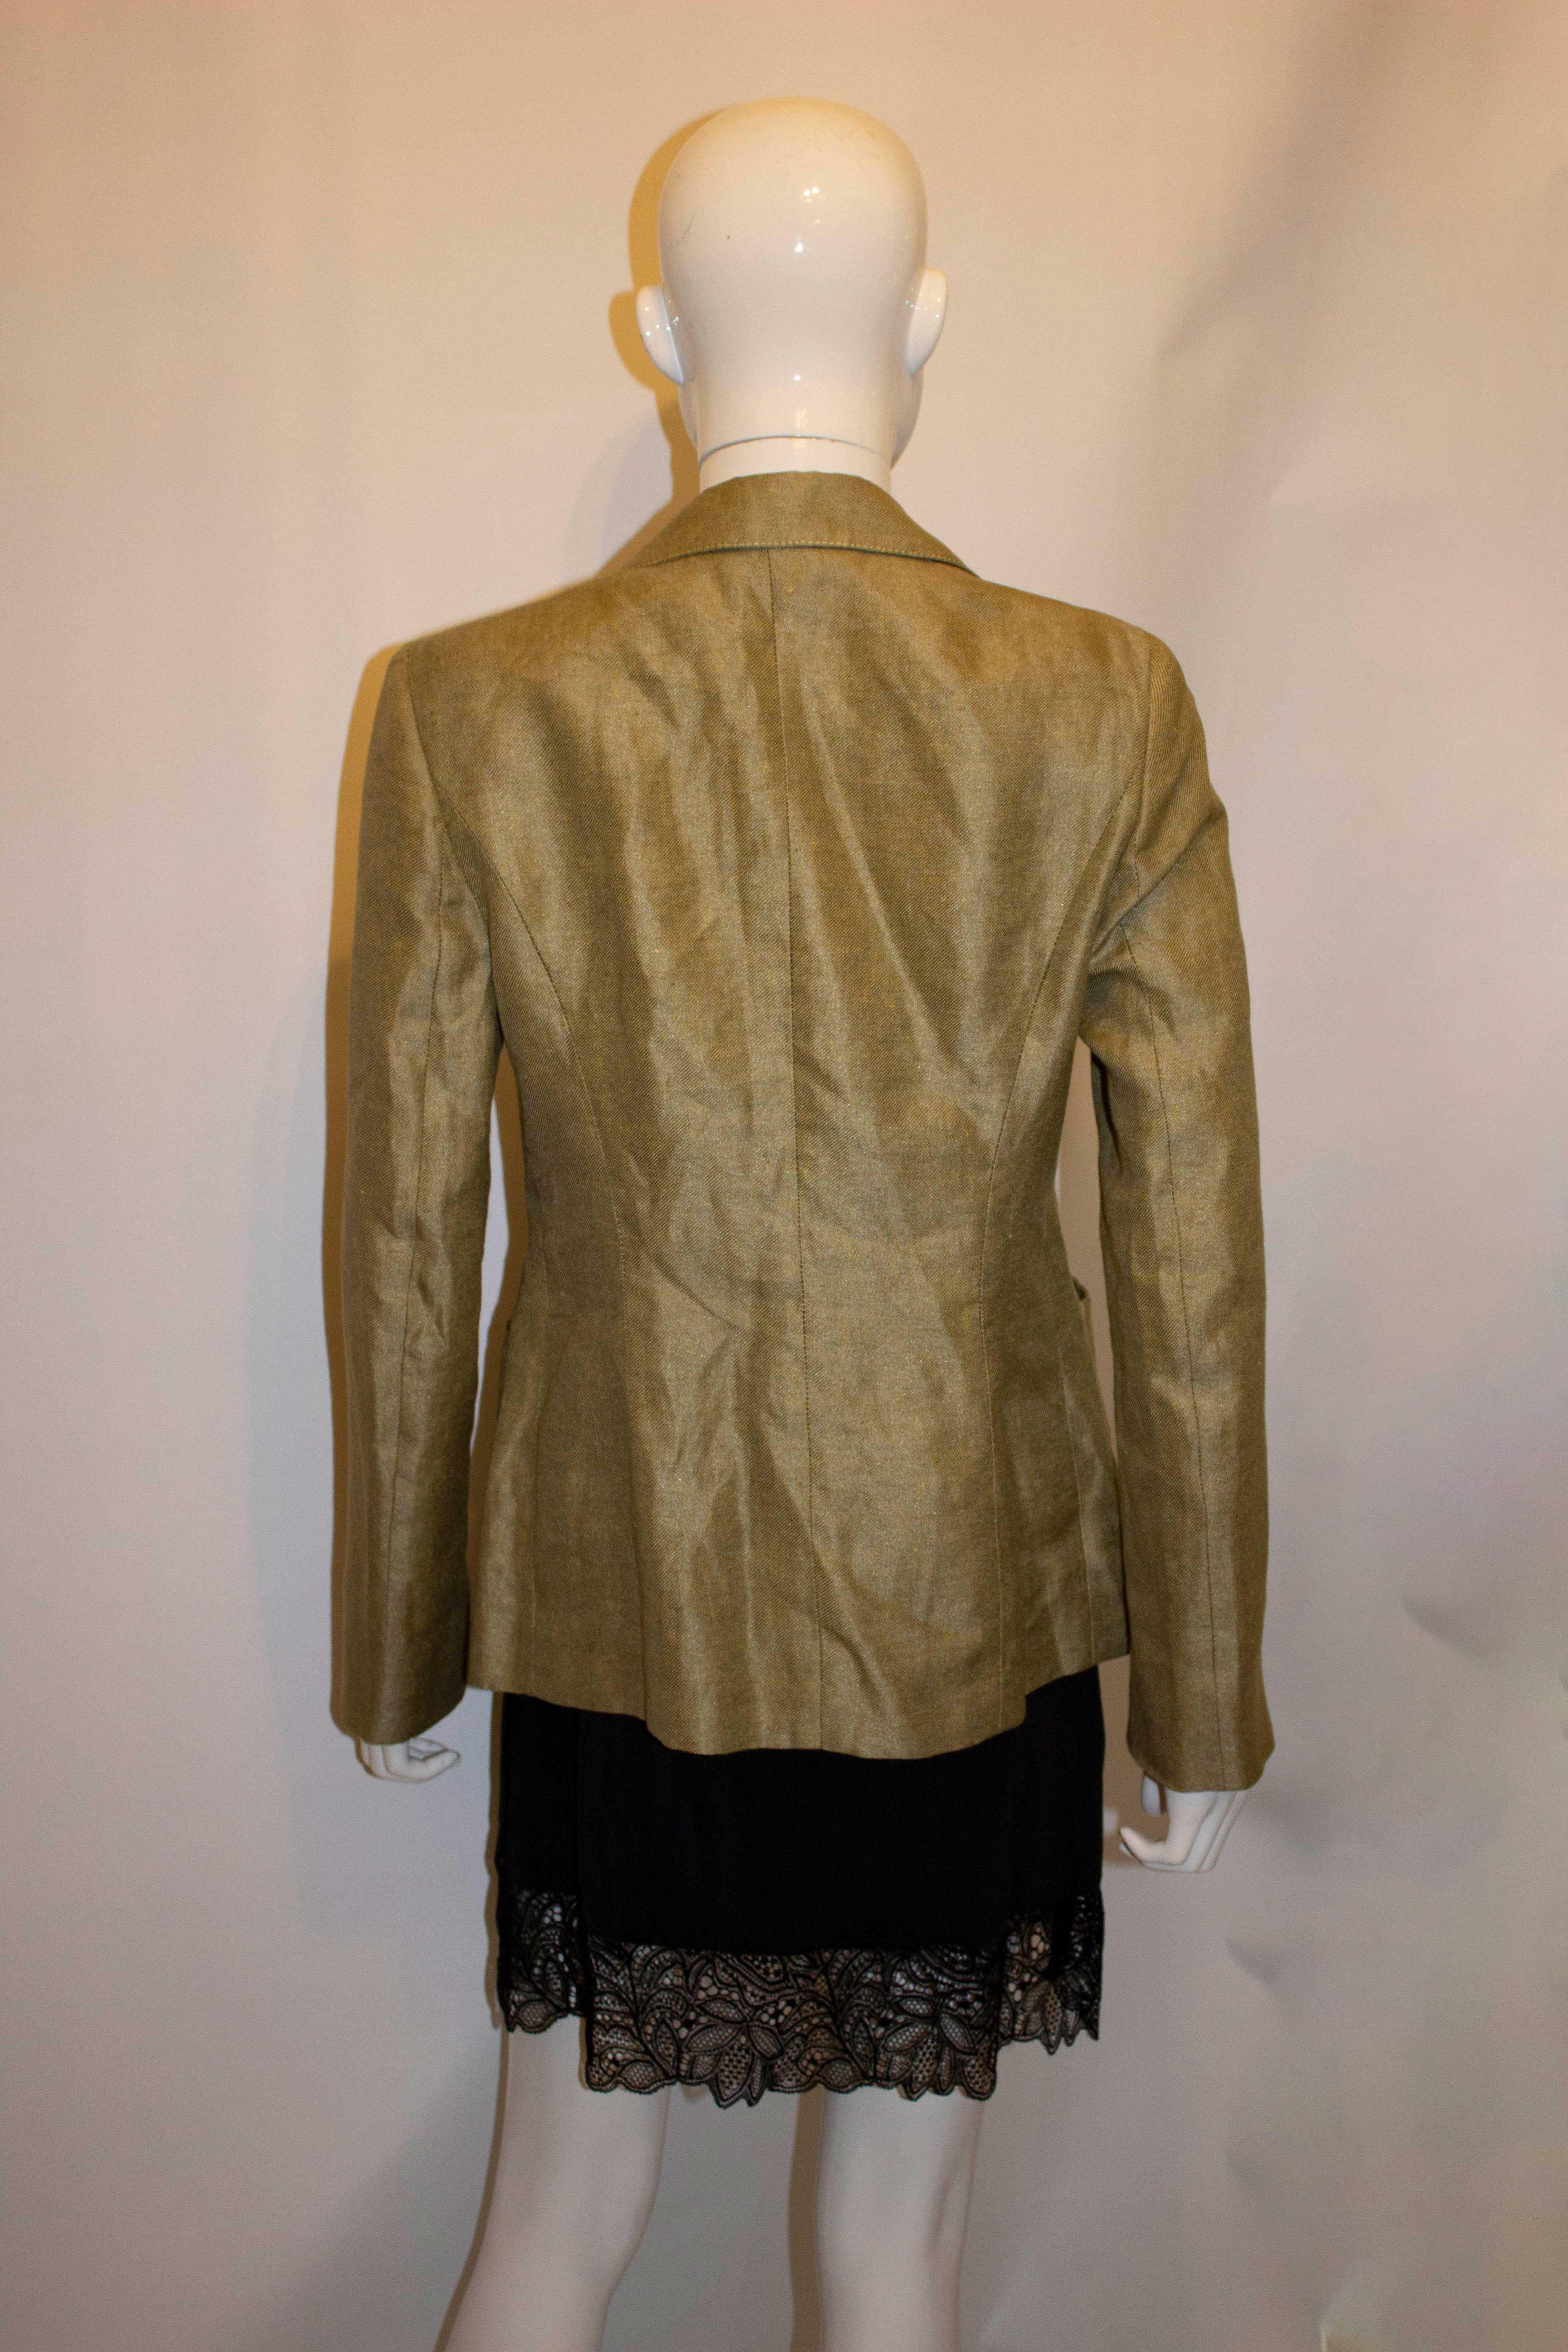 Brown Wonderful Jacket by Italian Luxury Firm Agnona For Sale